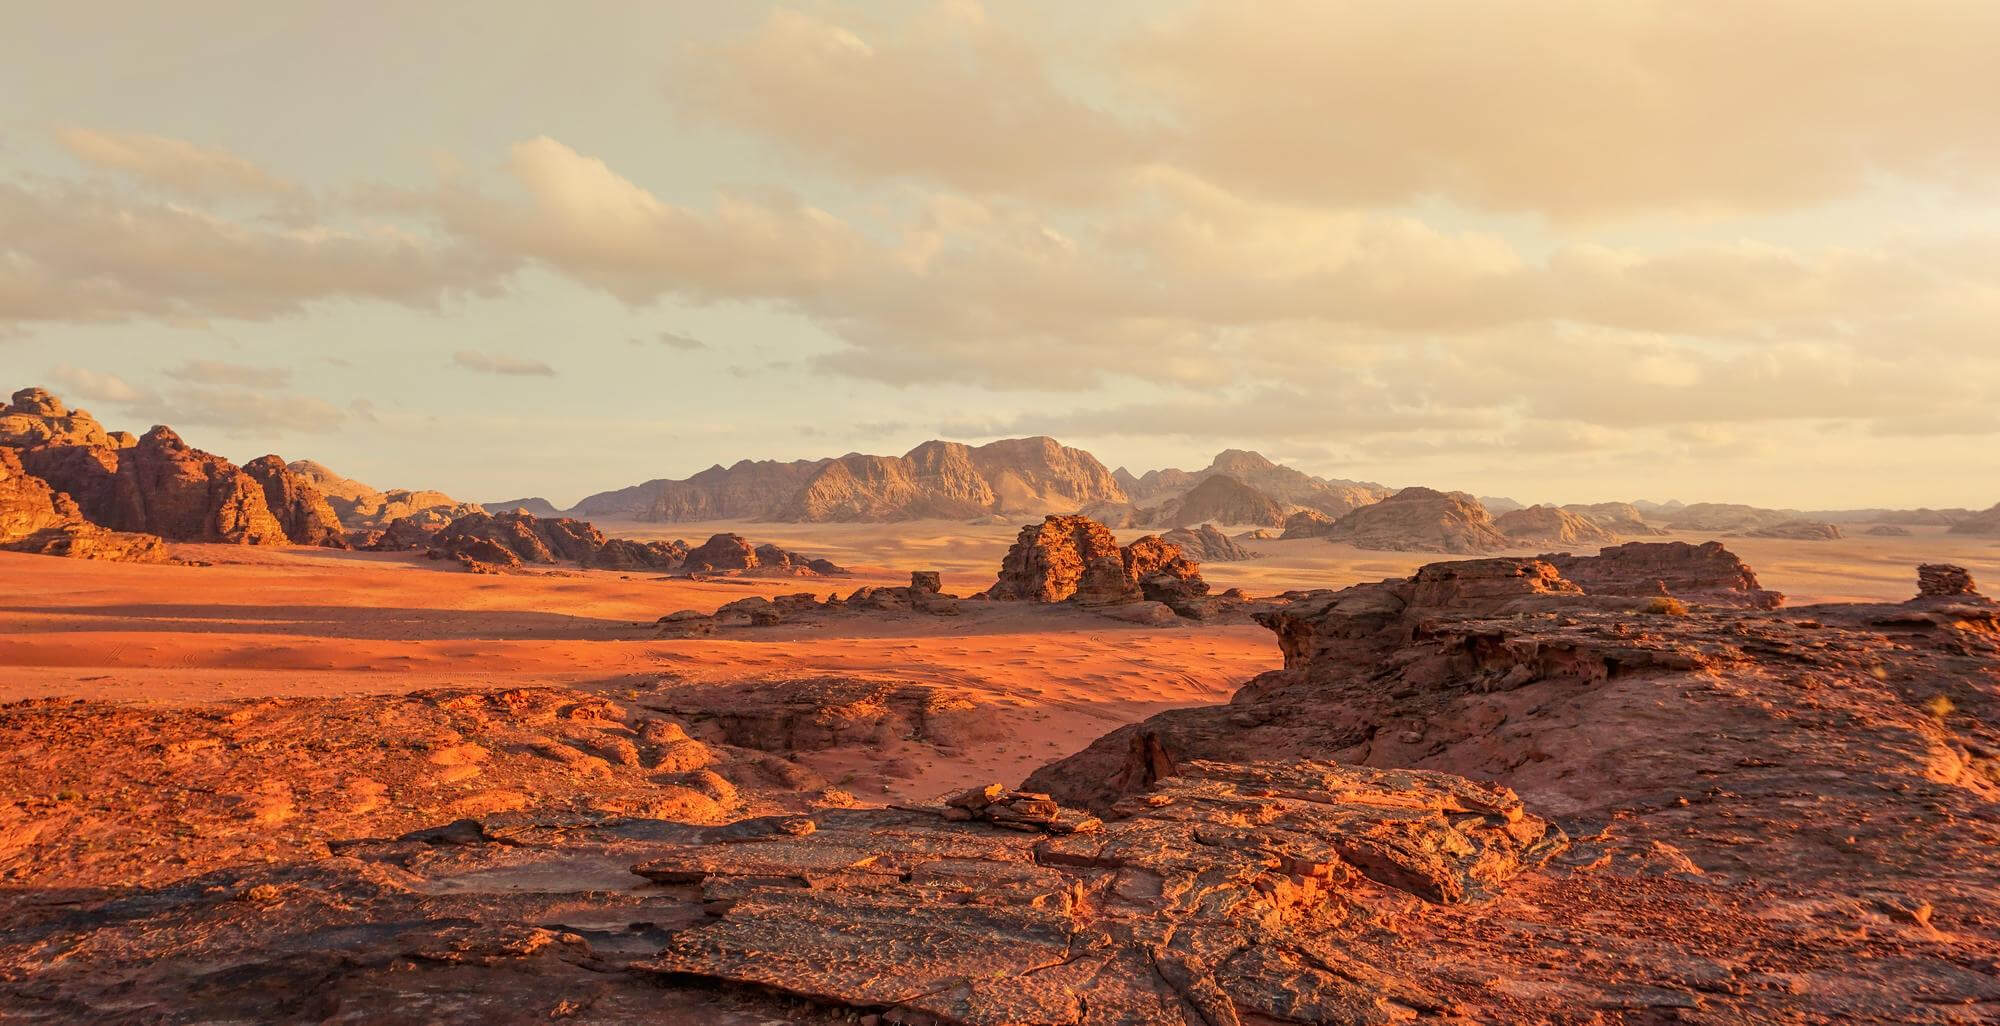 red-mars-like-landscape-wadi-rum-desert-jordan-this-location-was-used-as-set-many-science-fiction-movies-1.jpg